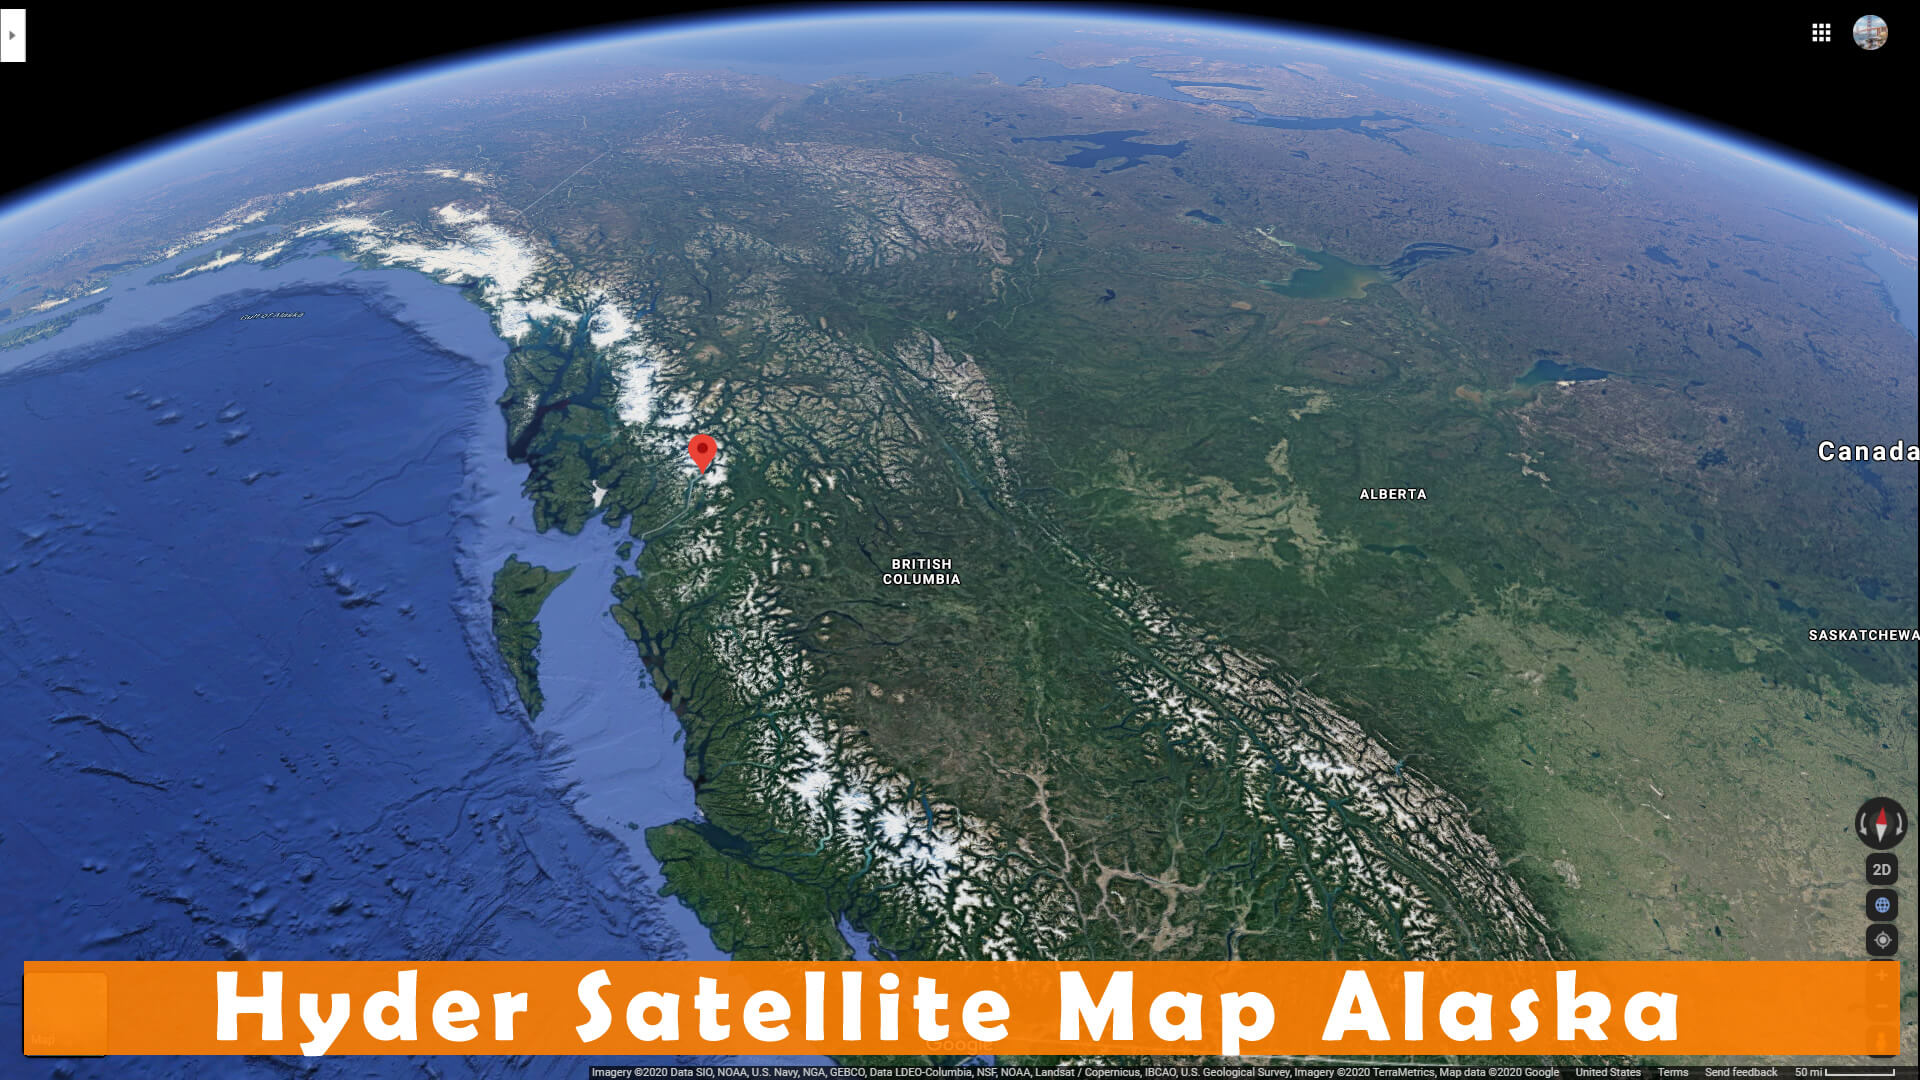 Hyder Satellite Map Alaska